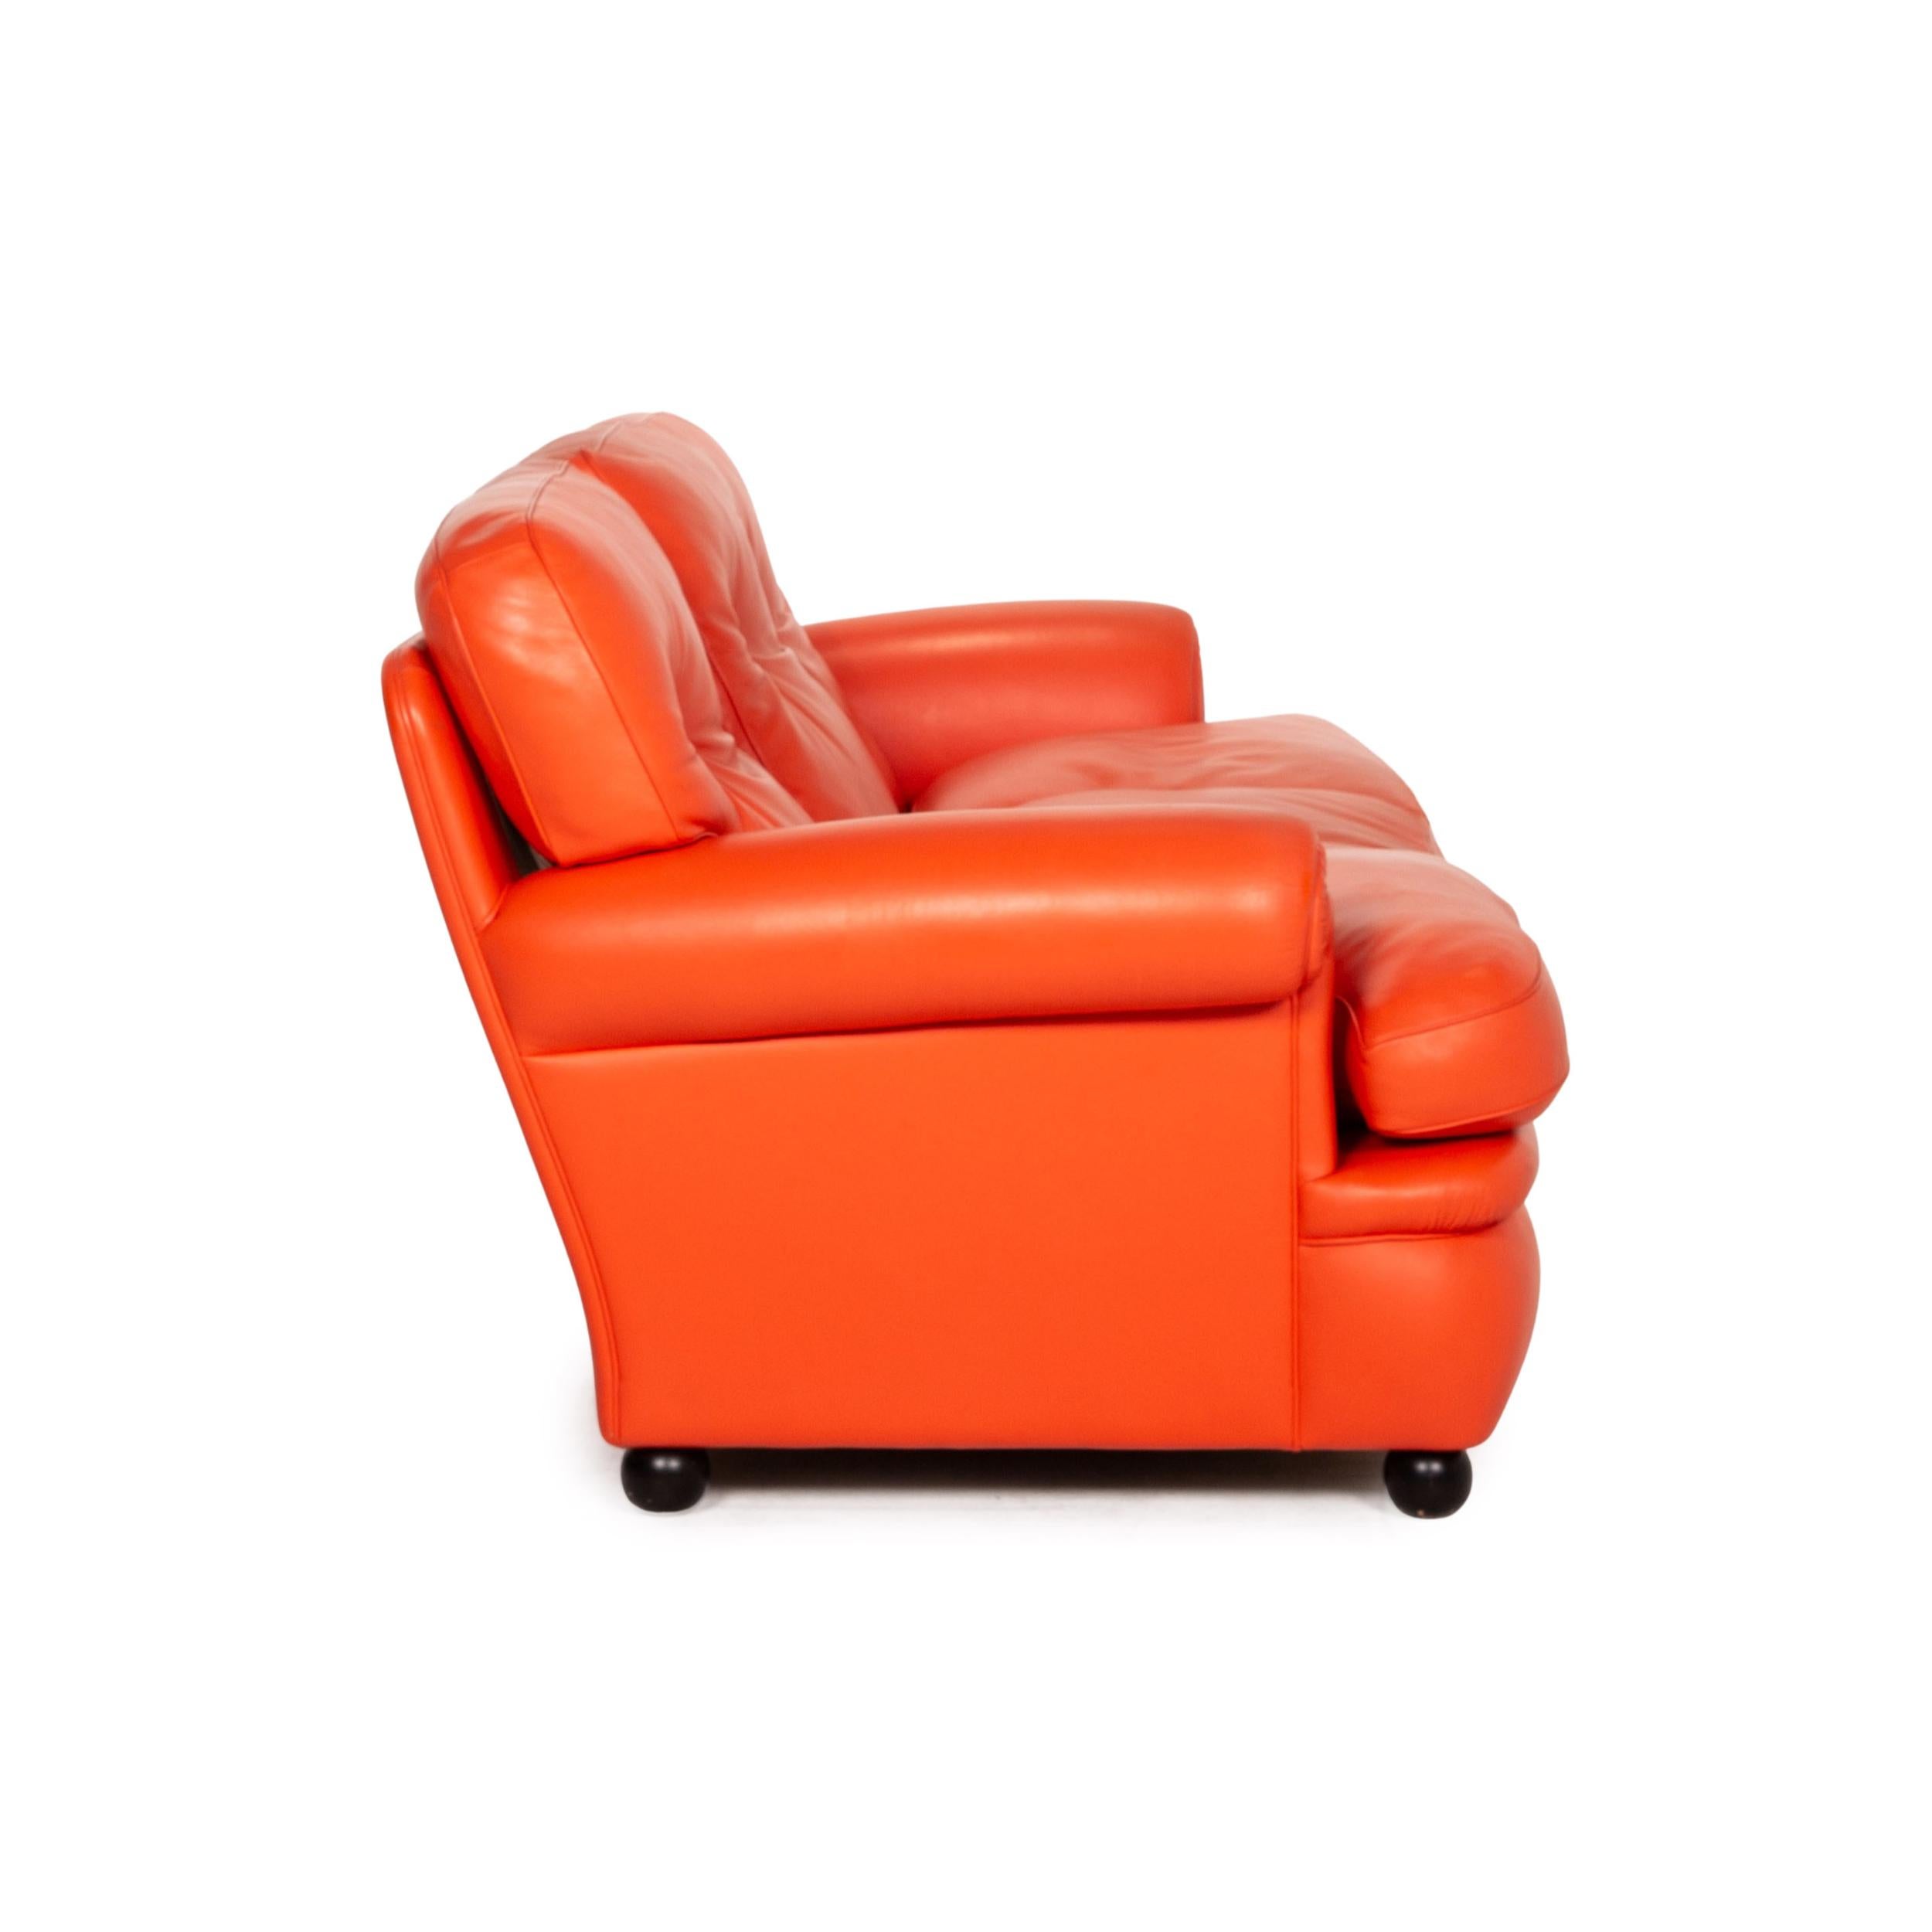 Poltrona Frau Dream on Leather Sofa Coral Orange Chesterfield Sofa Couch 3